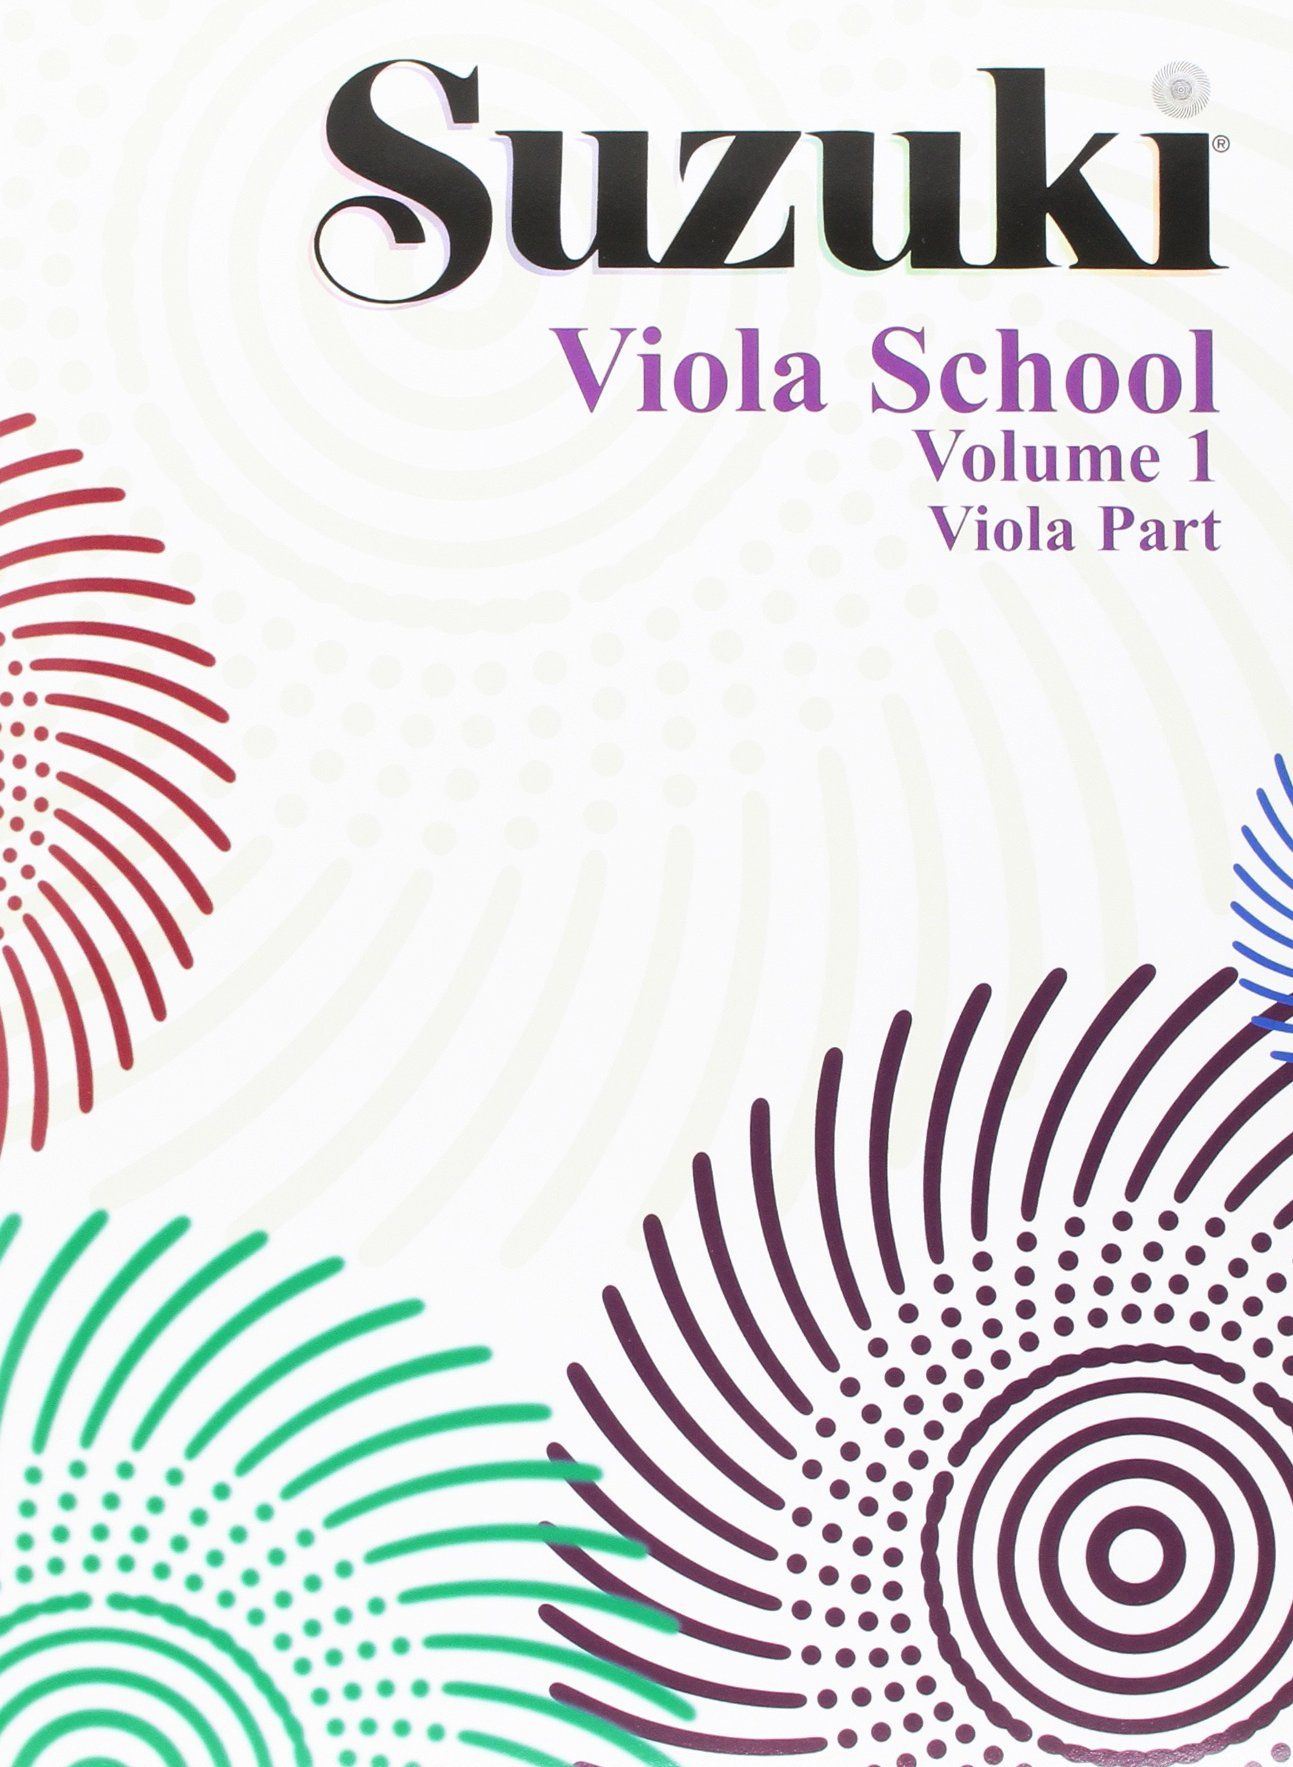 SUZUKI VILOA SCHOOL VOLUME 1 VIOLA PART